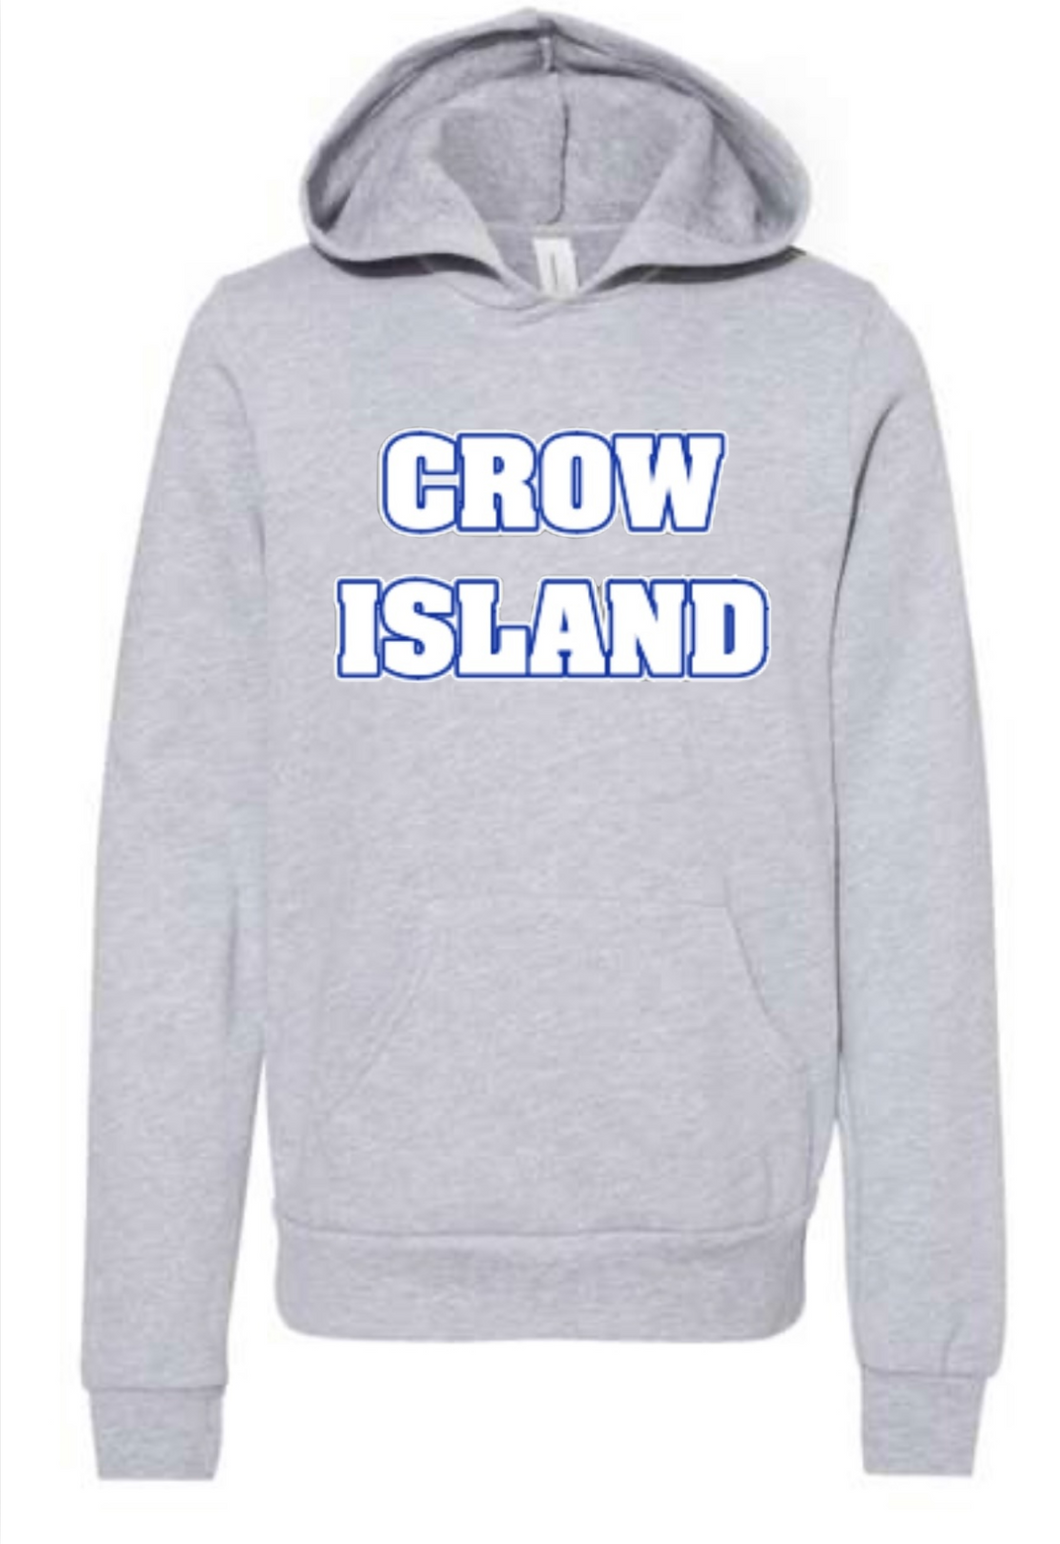 Crow Island Varsity Grey Custom Hoodie - Order by 11/20 for Book Fair Delivery